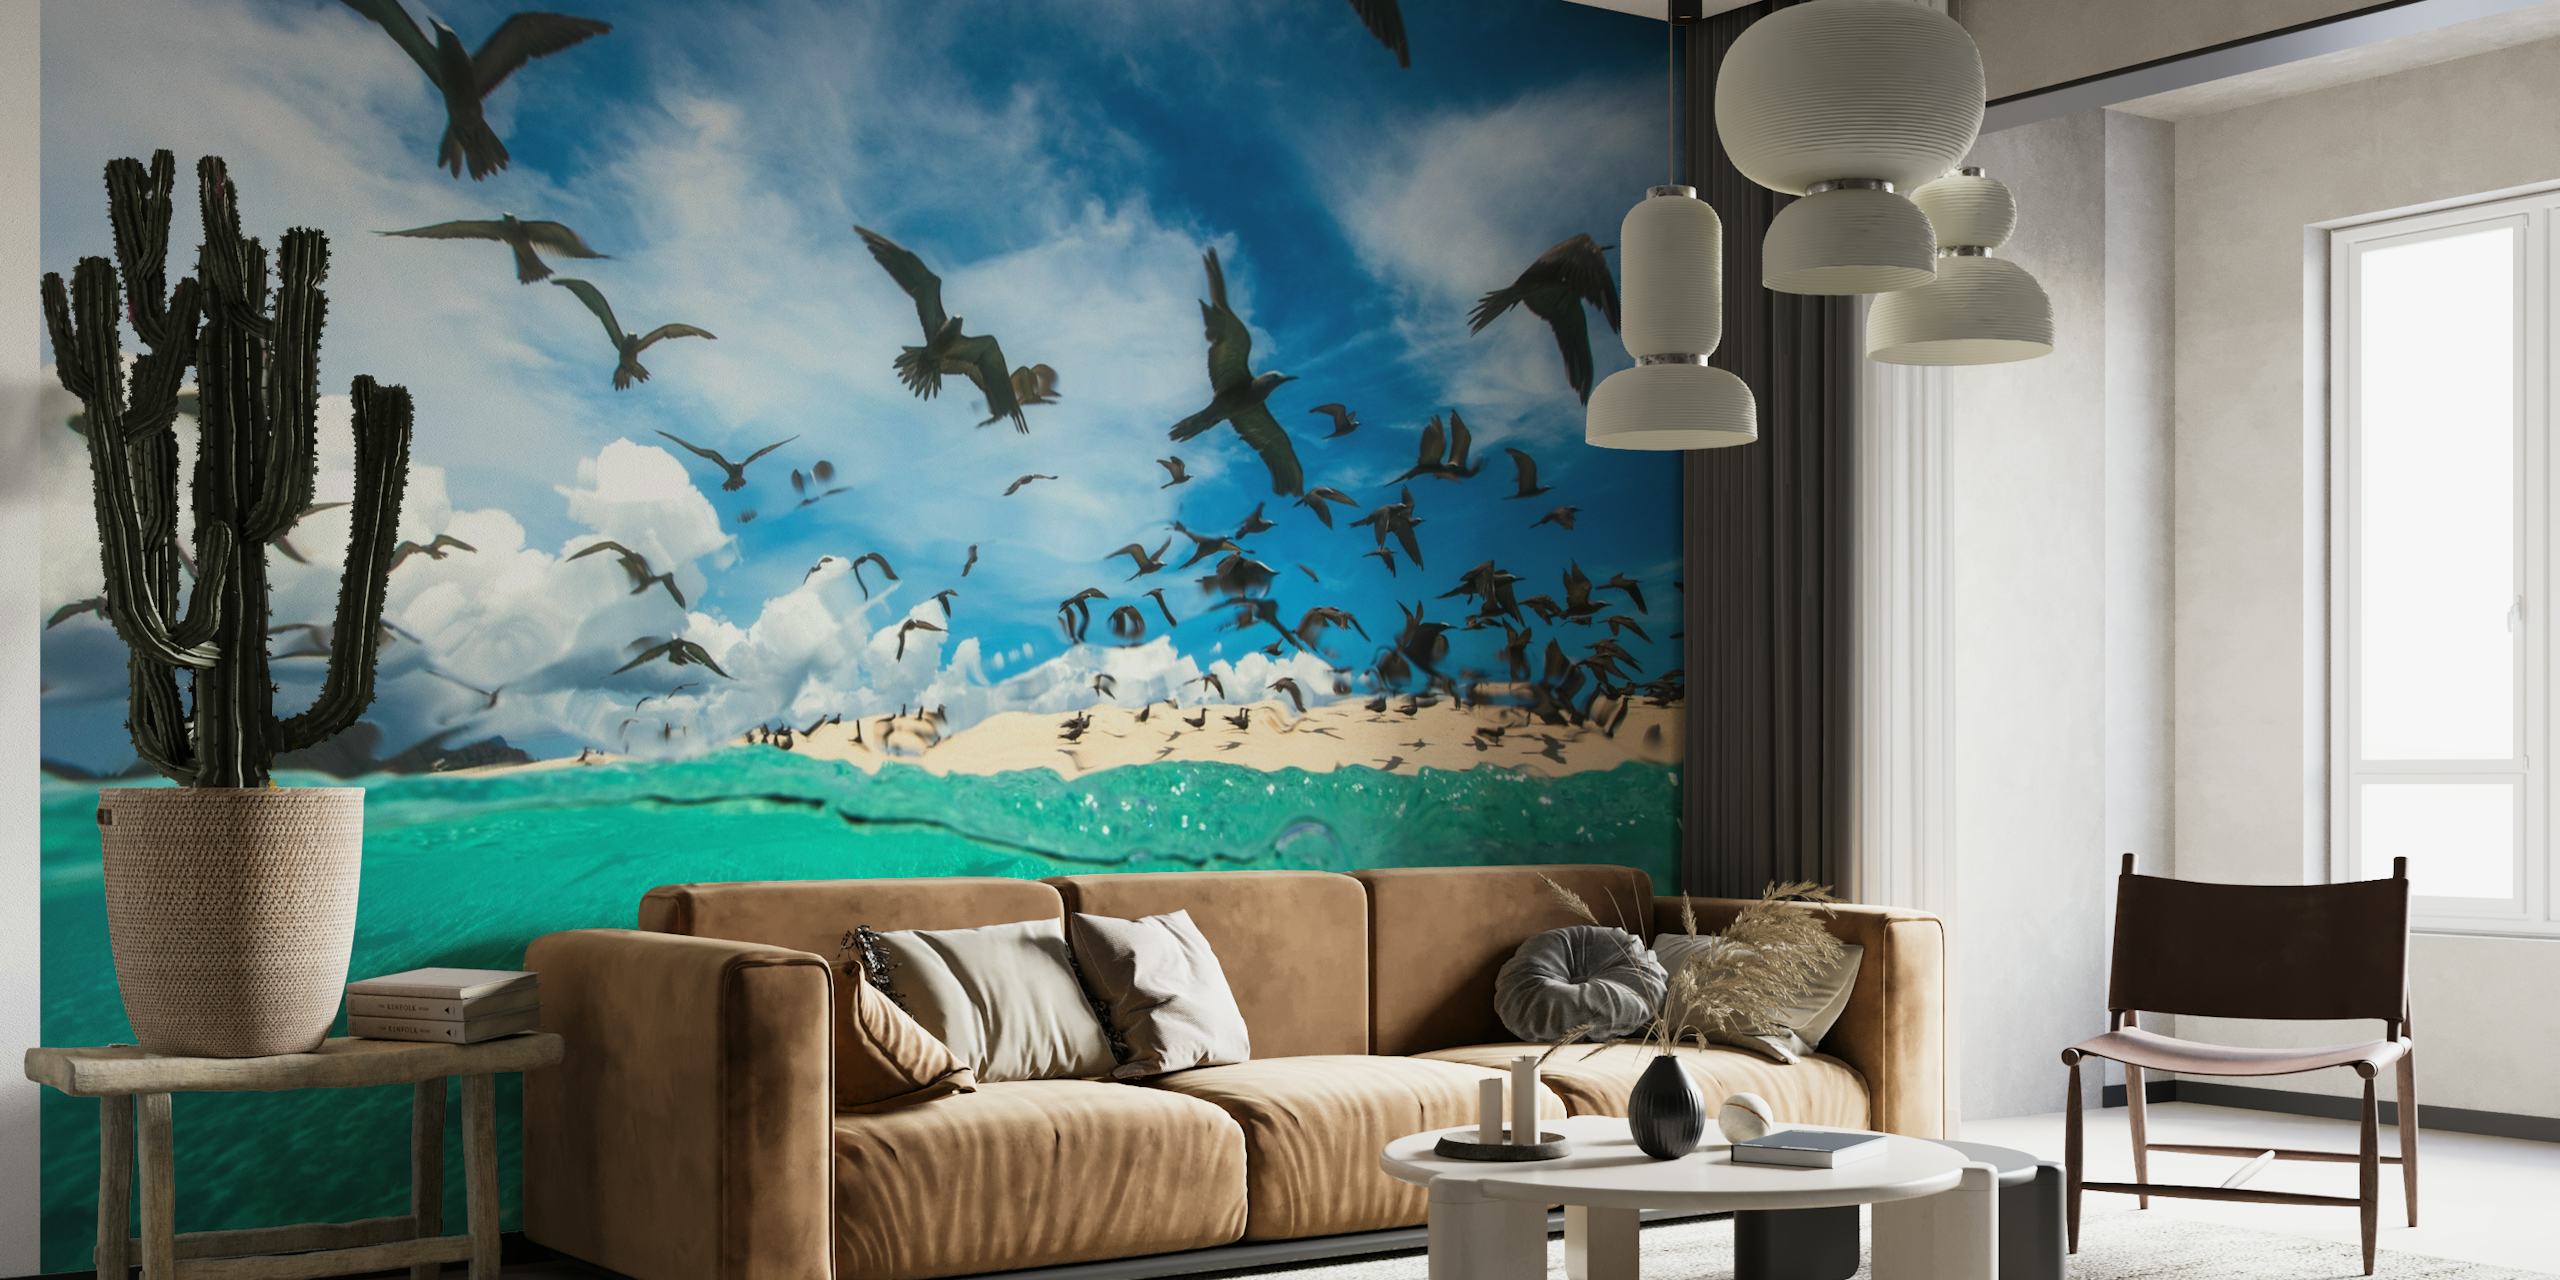 Ocean bird wallpaper